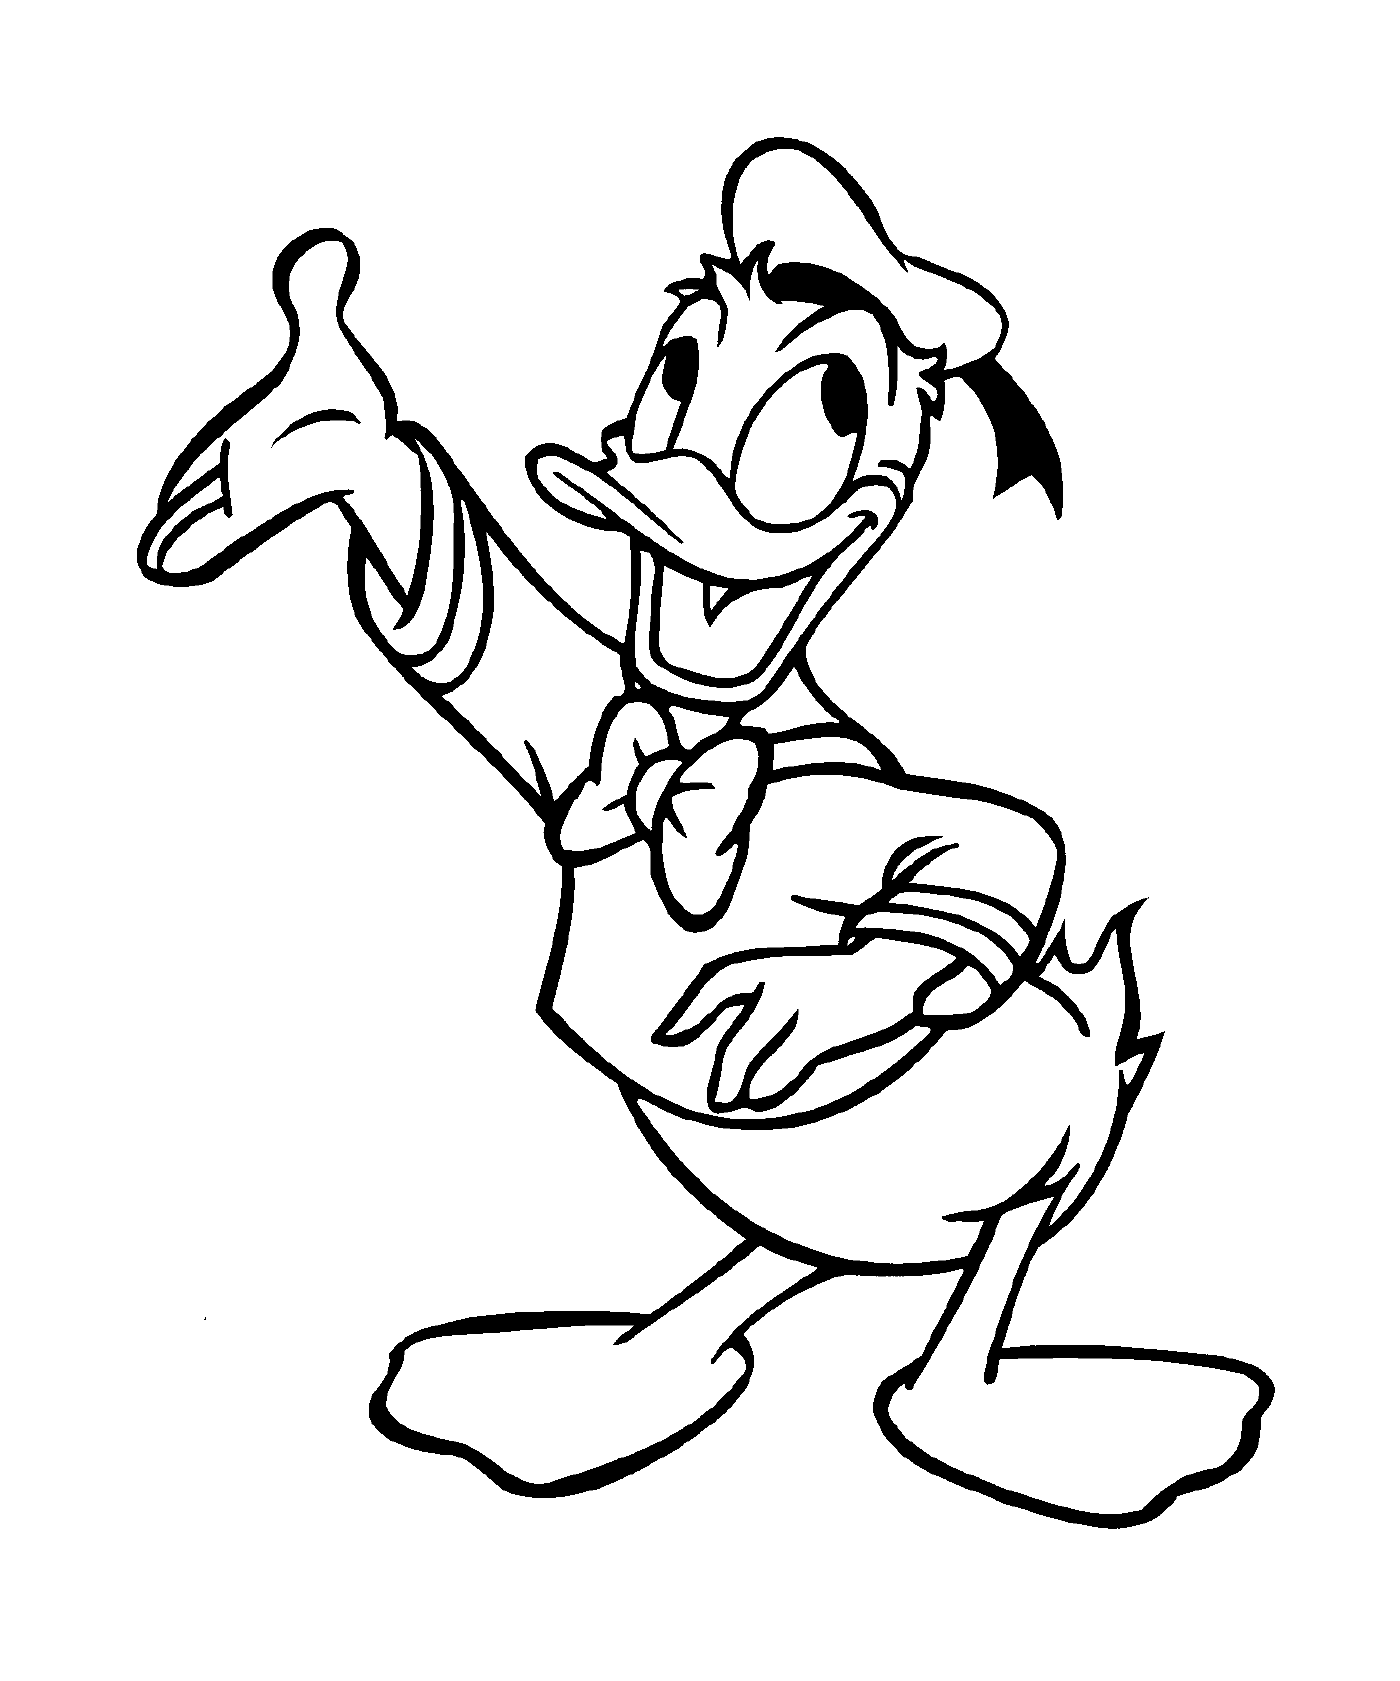  Donald duck 由Dick Lundy制作 